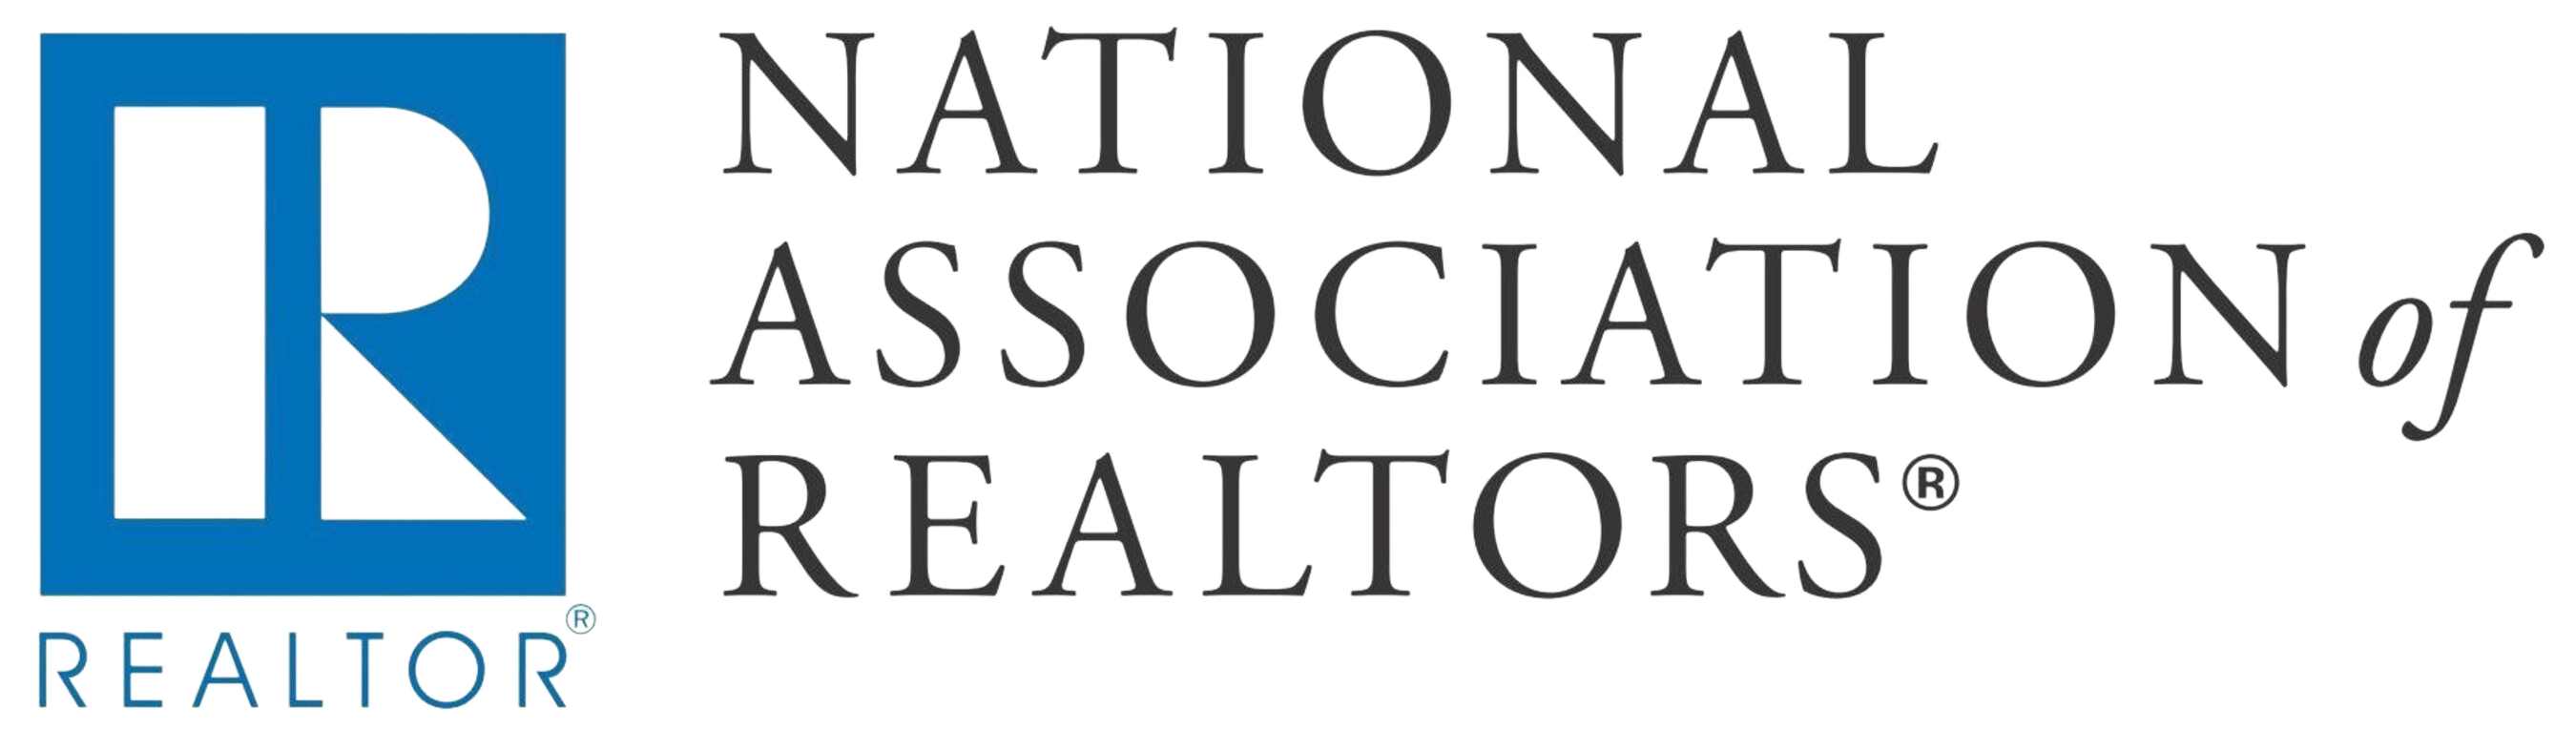 National Association of Realtors_transparent